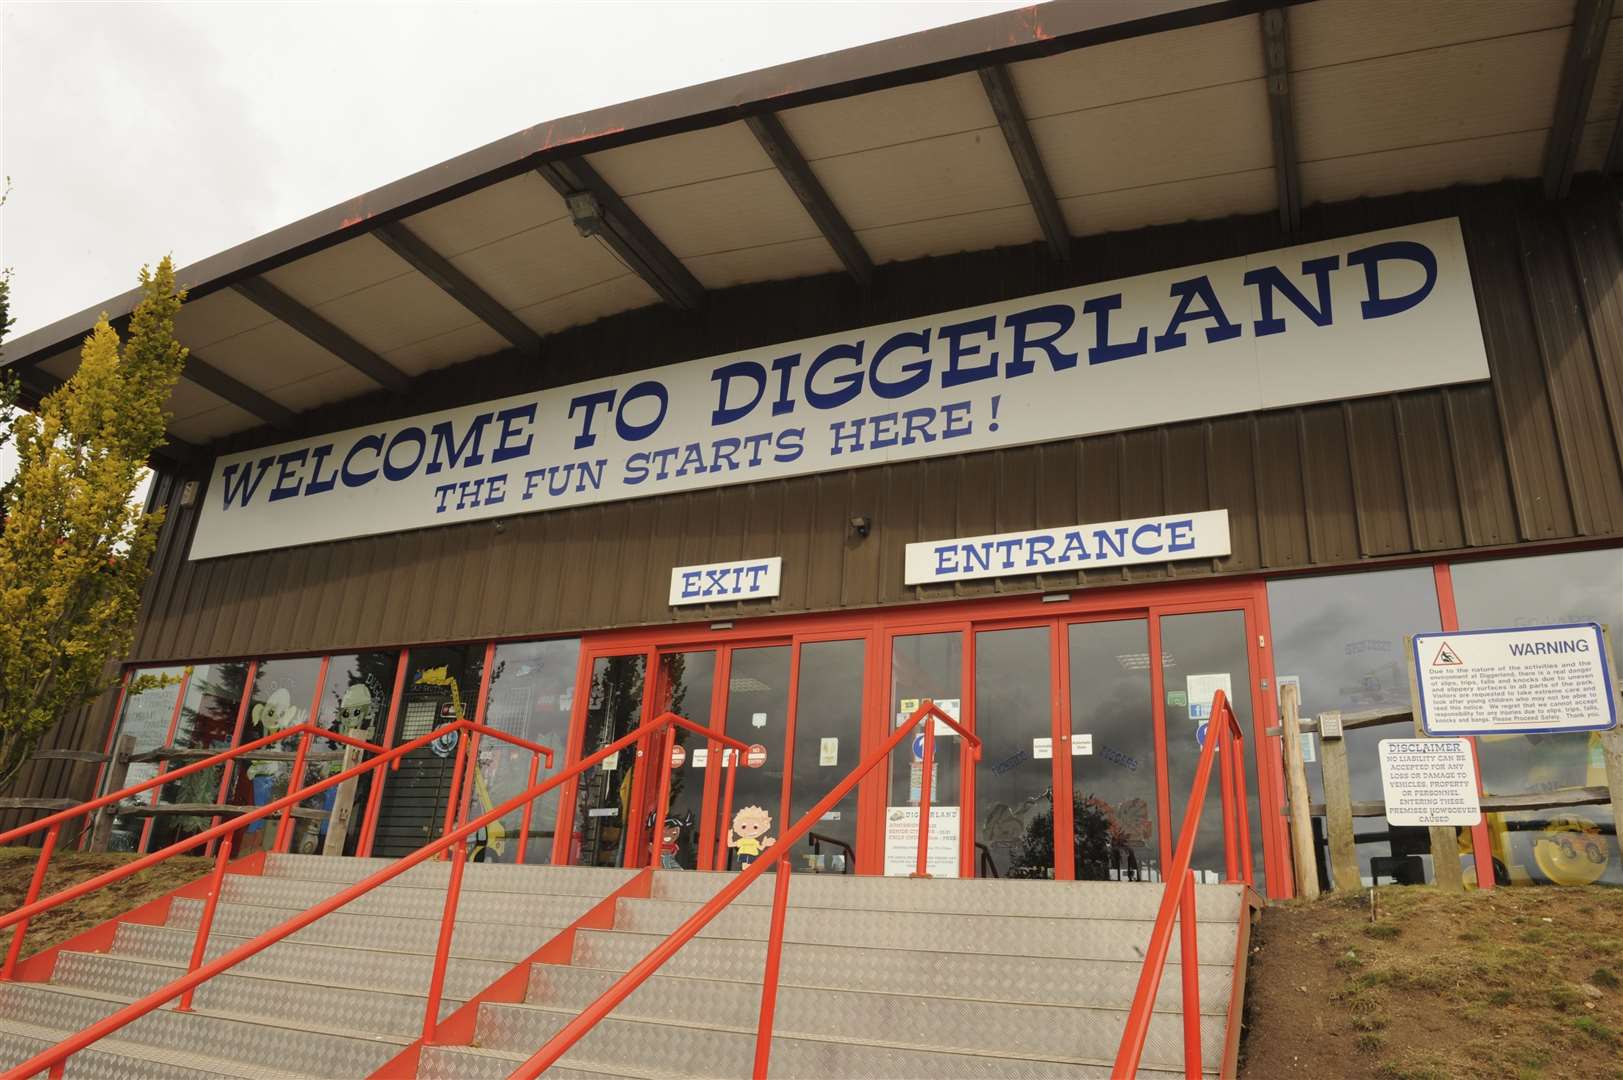 Diggerland is based in Medway. Picture: Steve Crispe